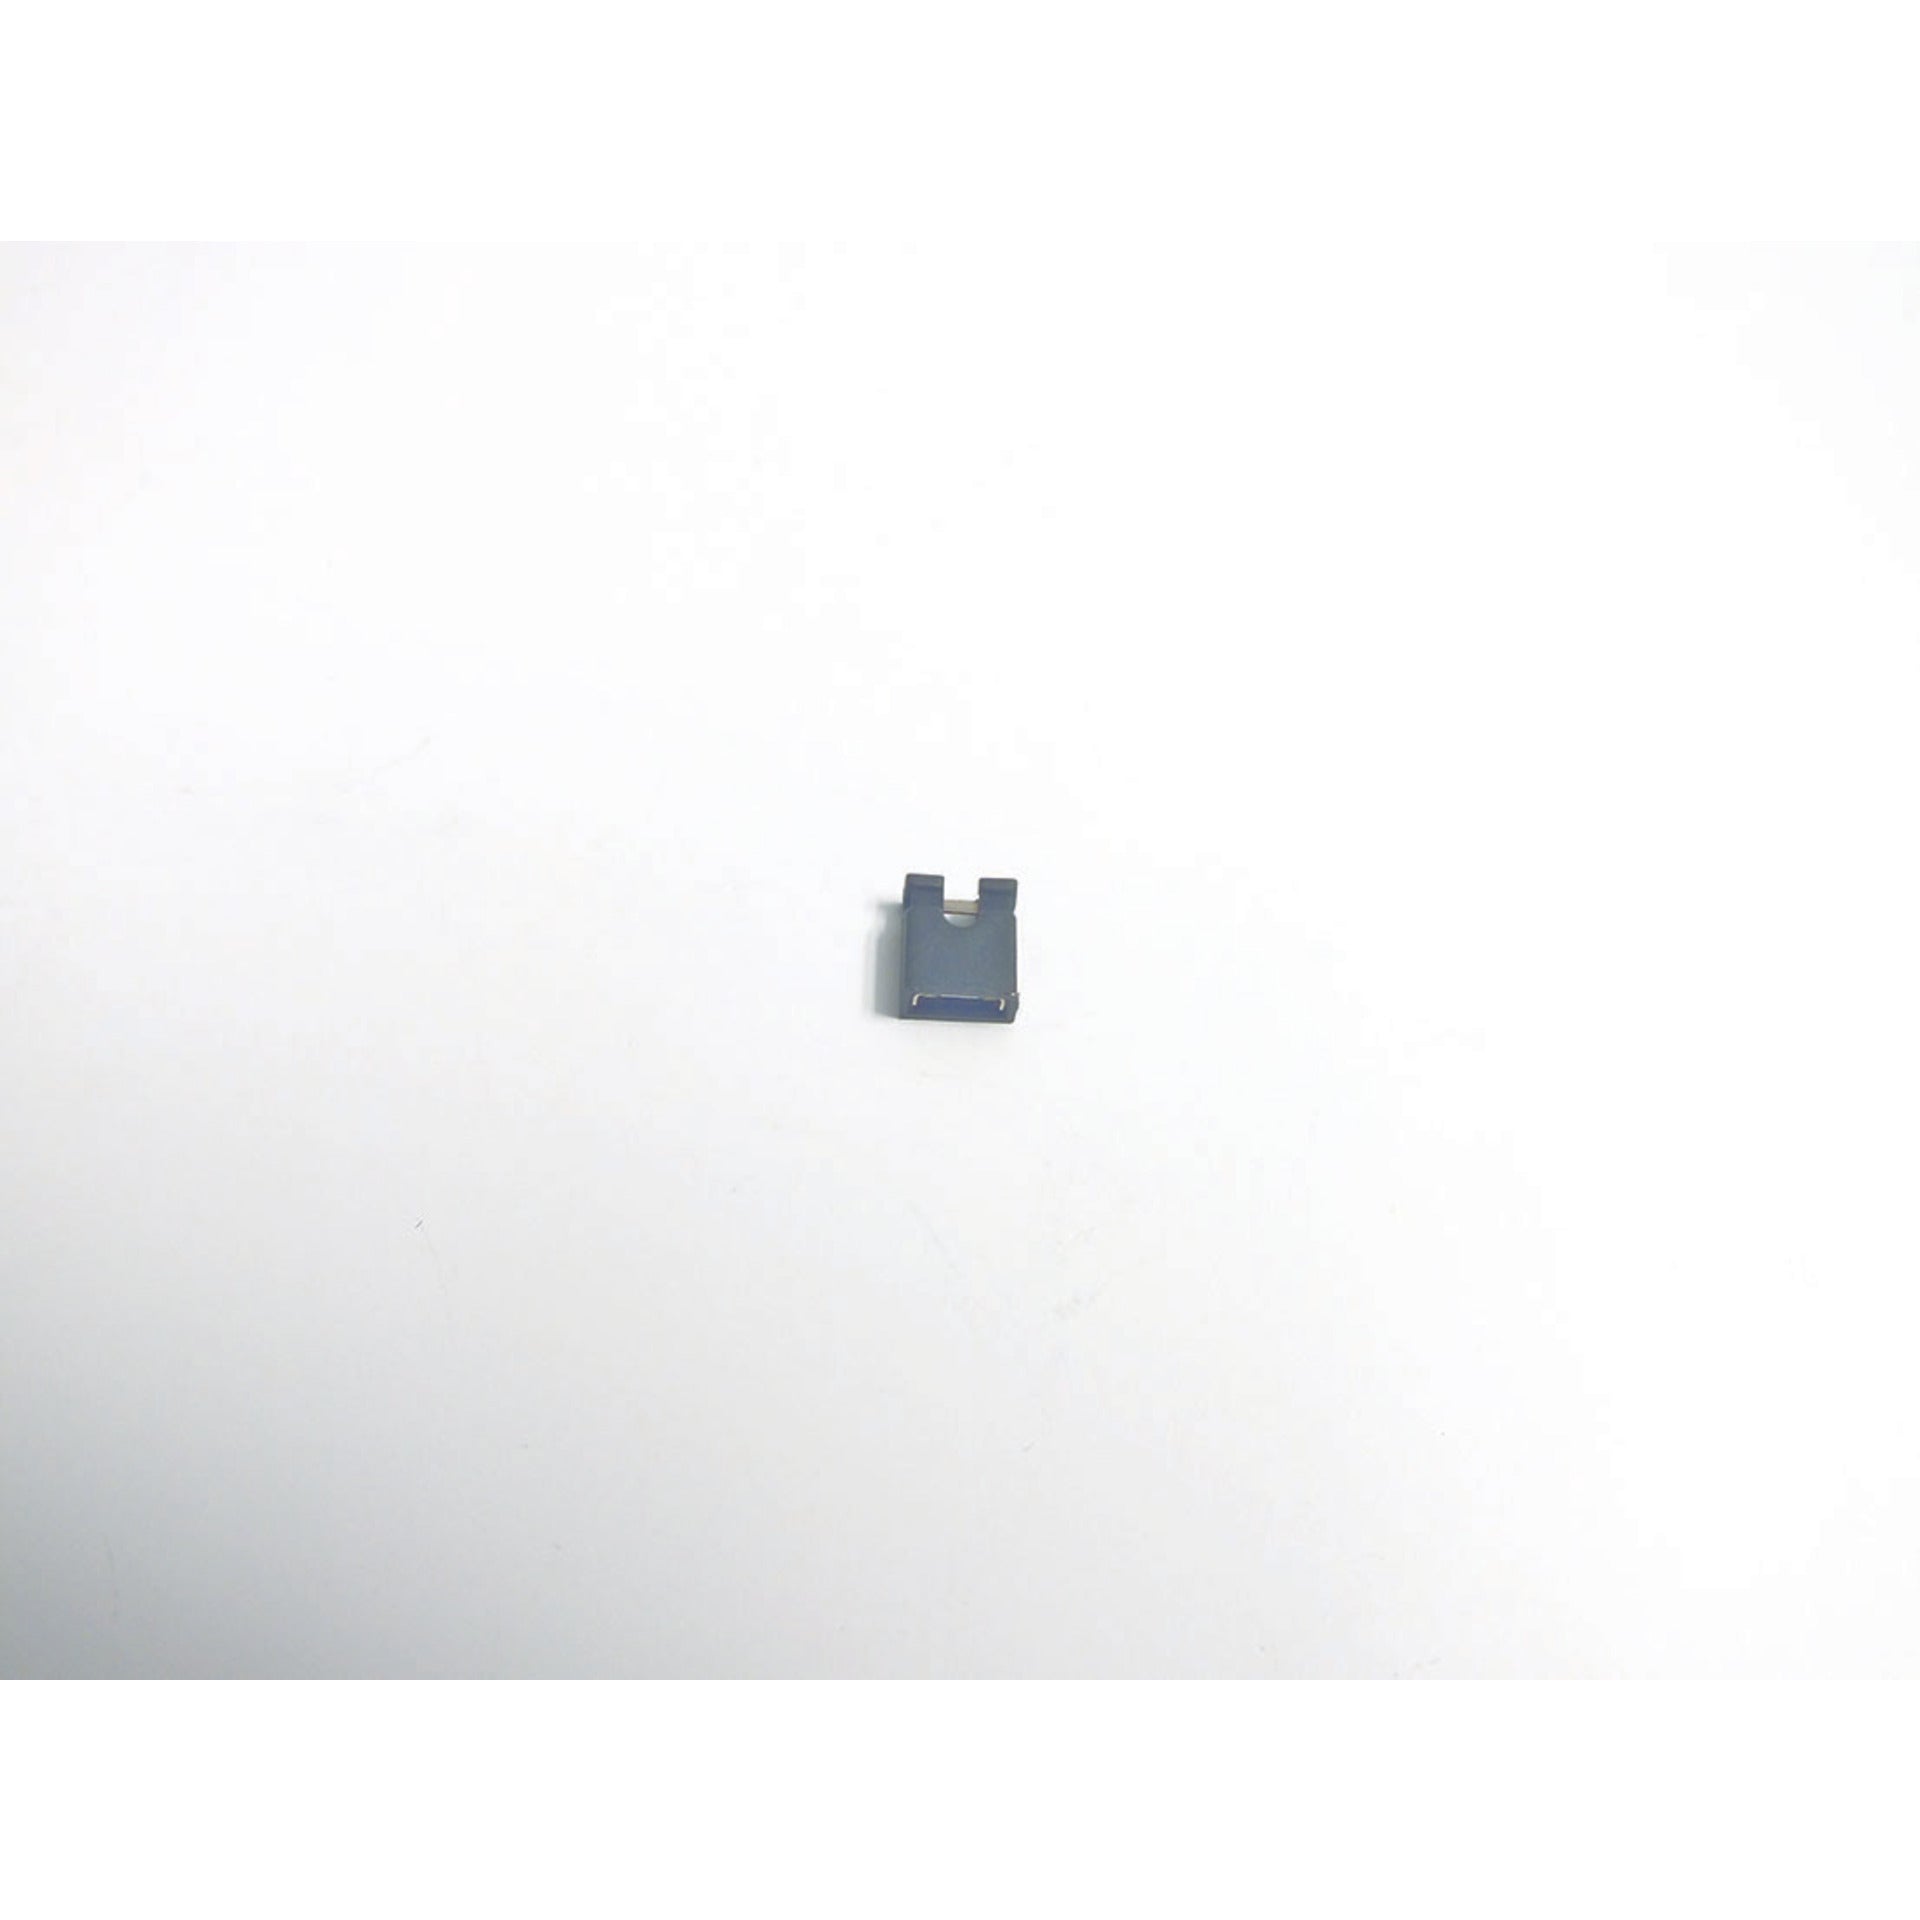 Pin Header Jumper für Festplatten/CD Laufwerk/Motherboard